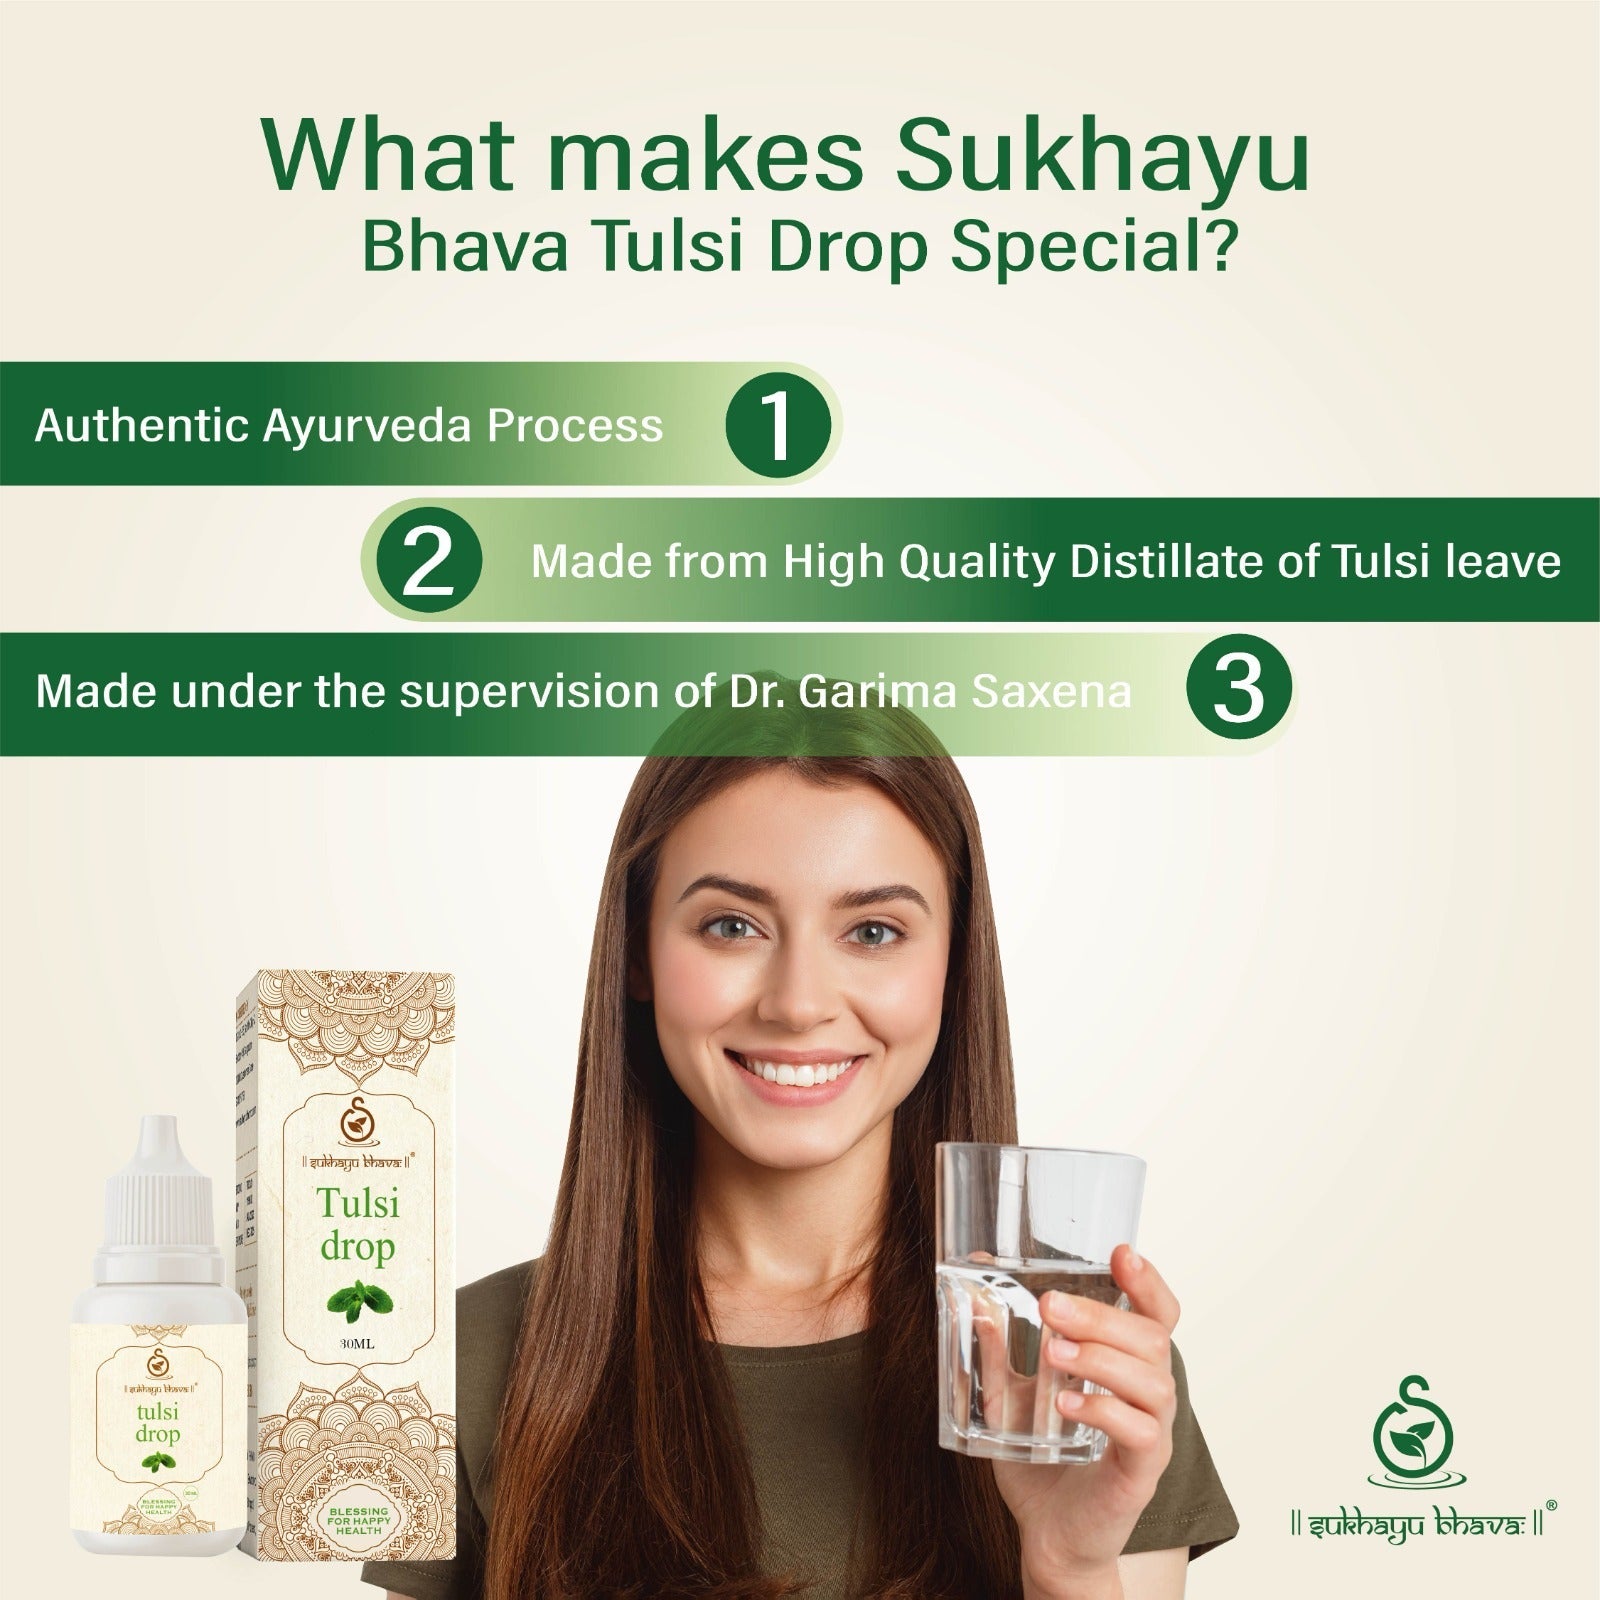 Sukhayu Bhava Tulsi Drop